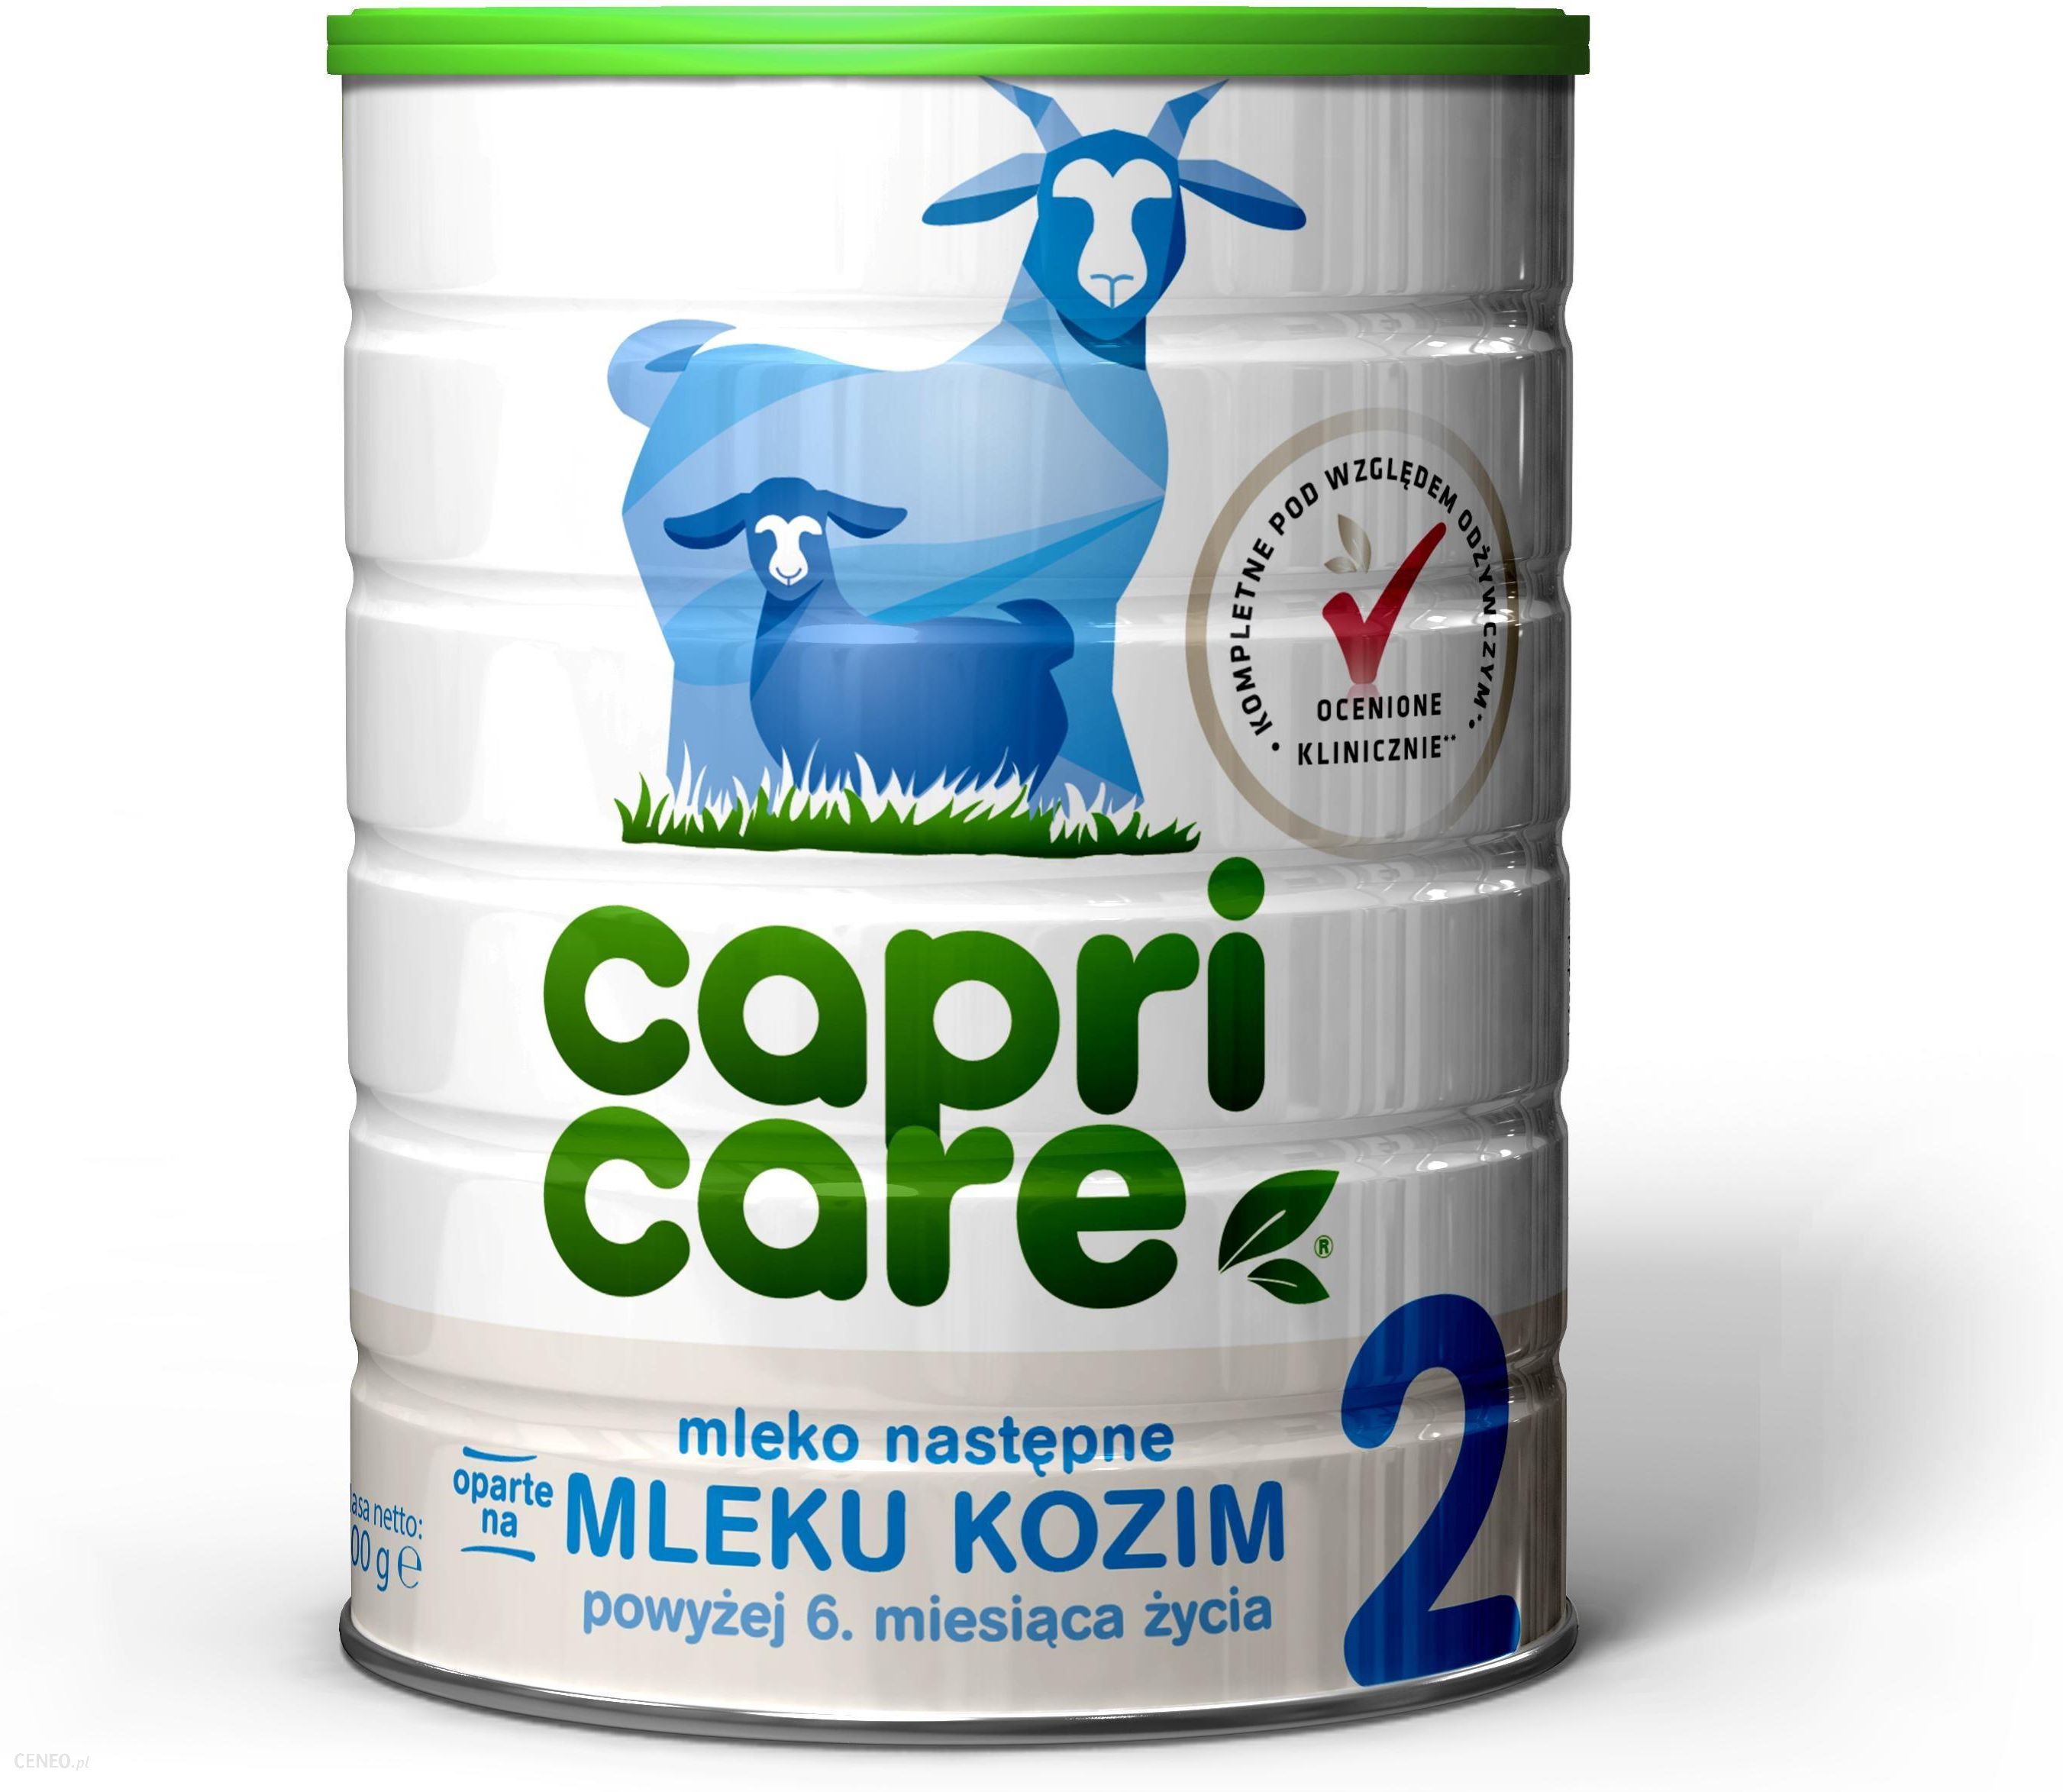 Capricare 2 Latte Di Capra Polvere 6-12 Mesi 400g